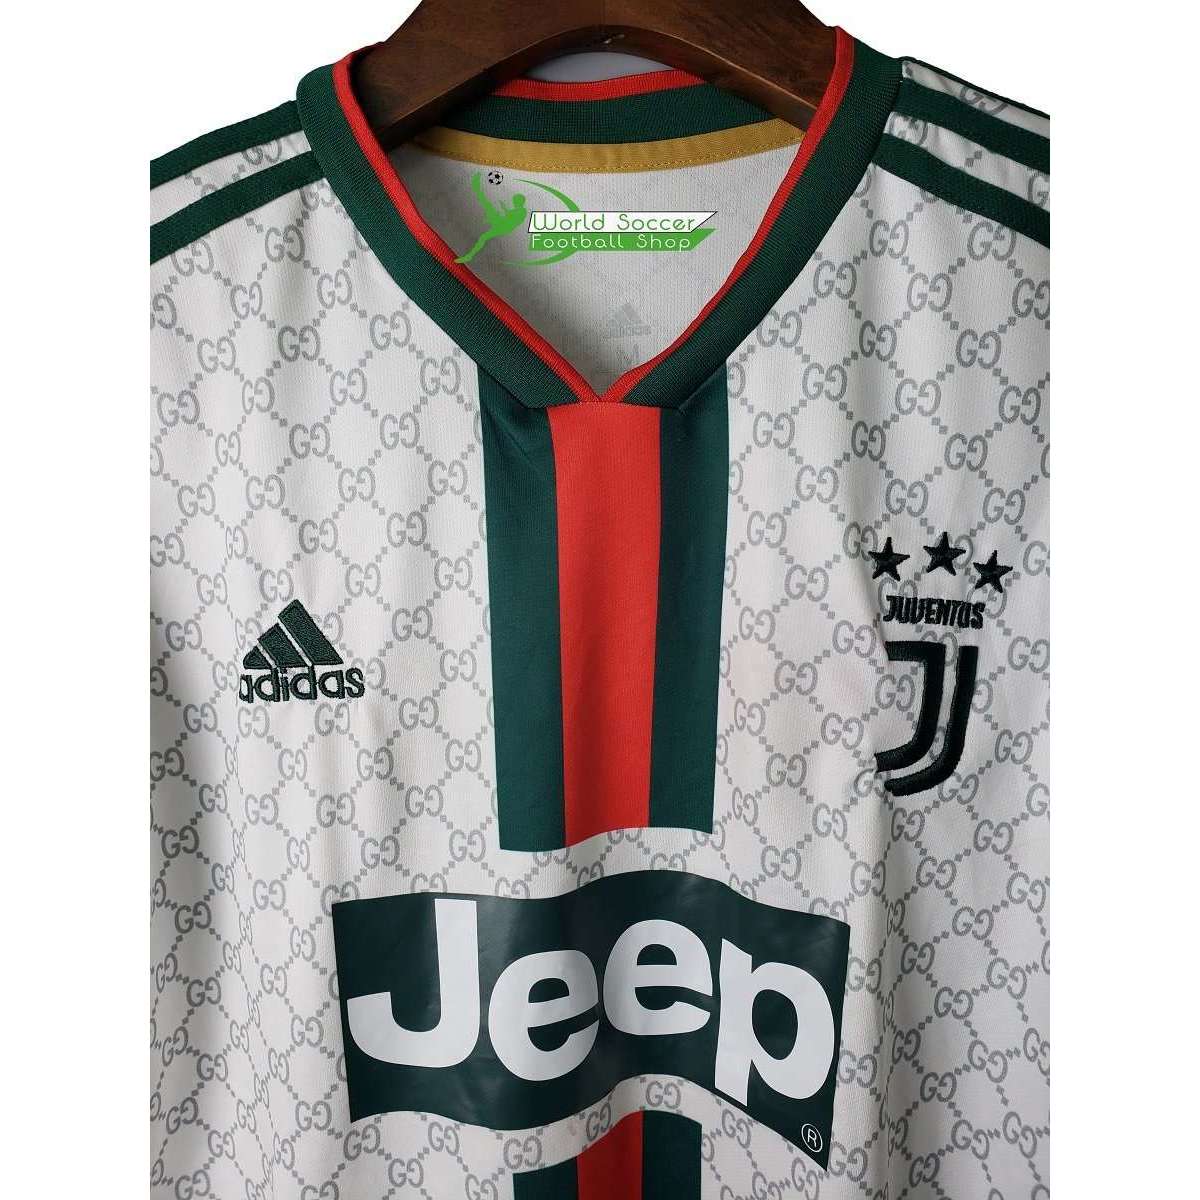 Juventus Fc Football Club Adidas Gucci Top Casual 2019 20 Fútbol Soccer Kit Calcio Shirt Jersey Fussball Camisa Camiseta Trikot Maillot Maglia Bnwt